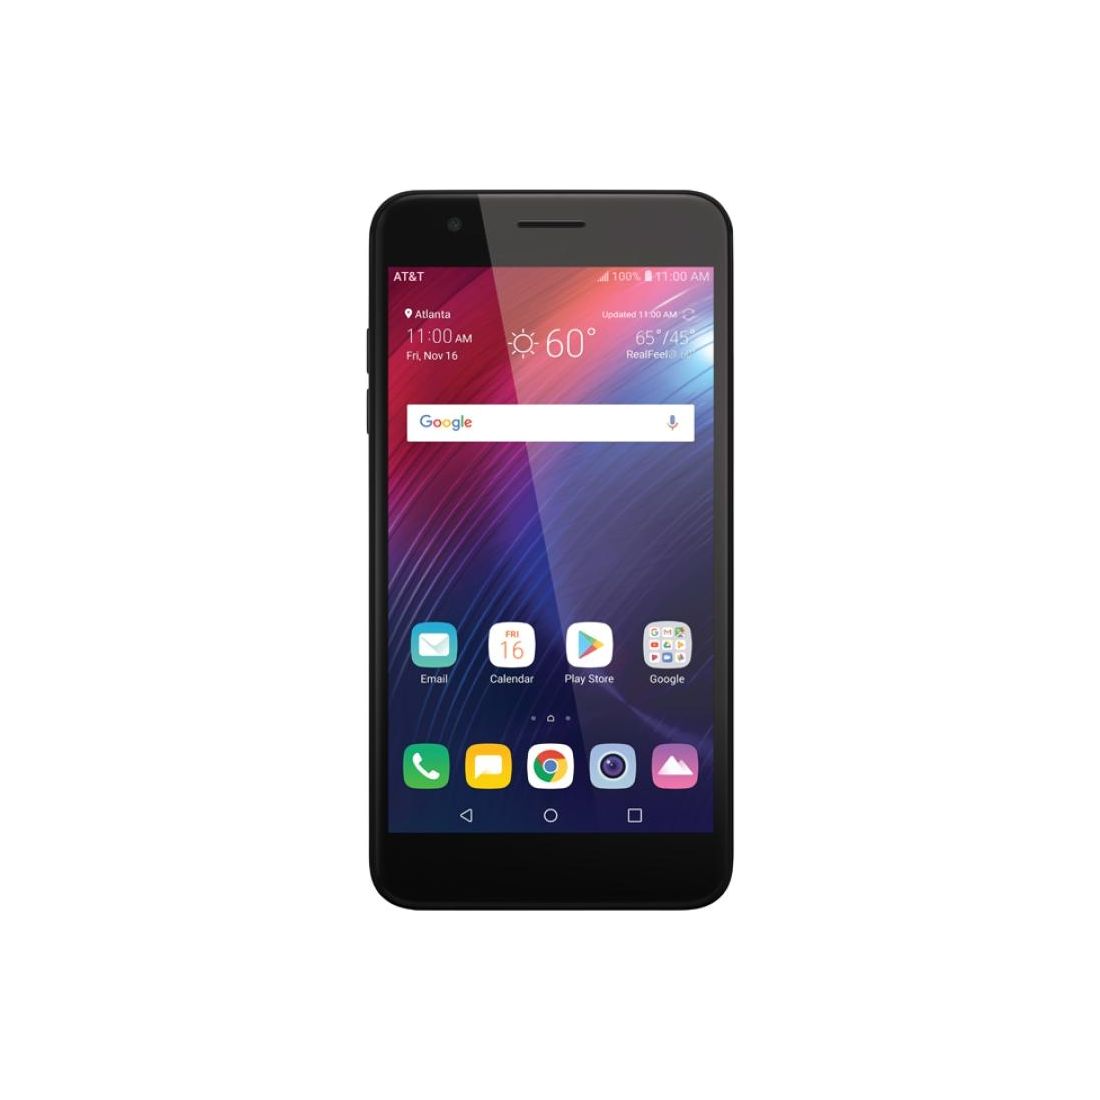 LG Phoenix Plus - AT&T Prepaid - Black - Mobile Phone